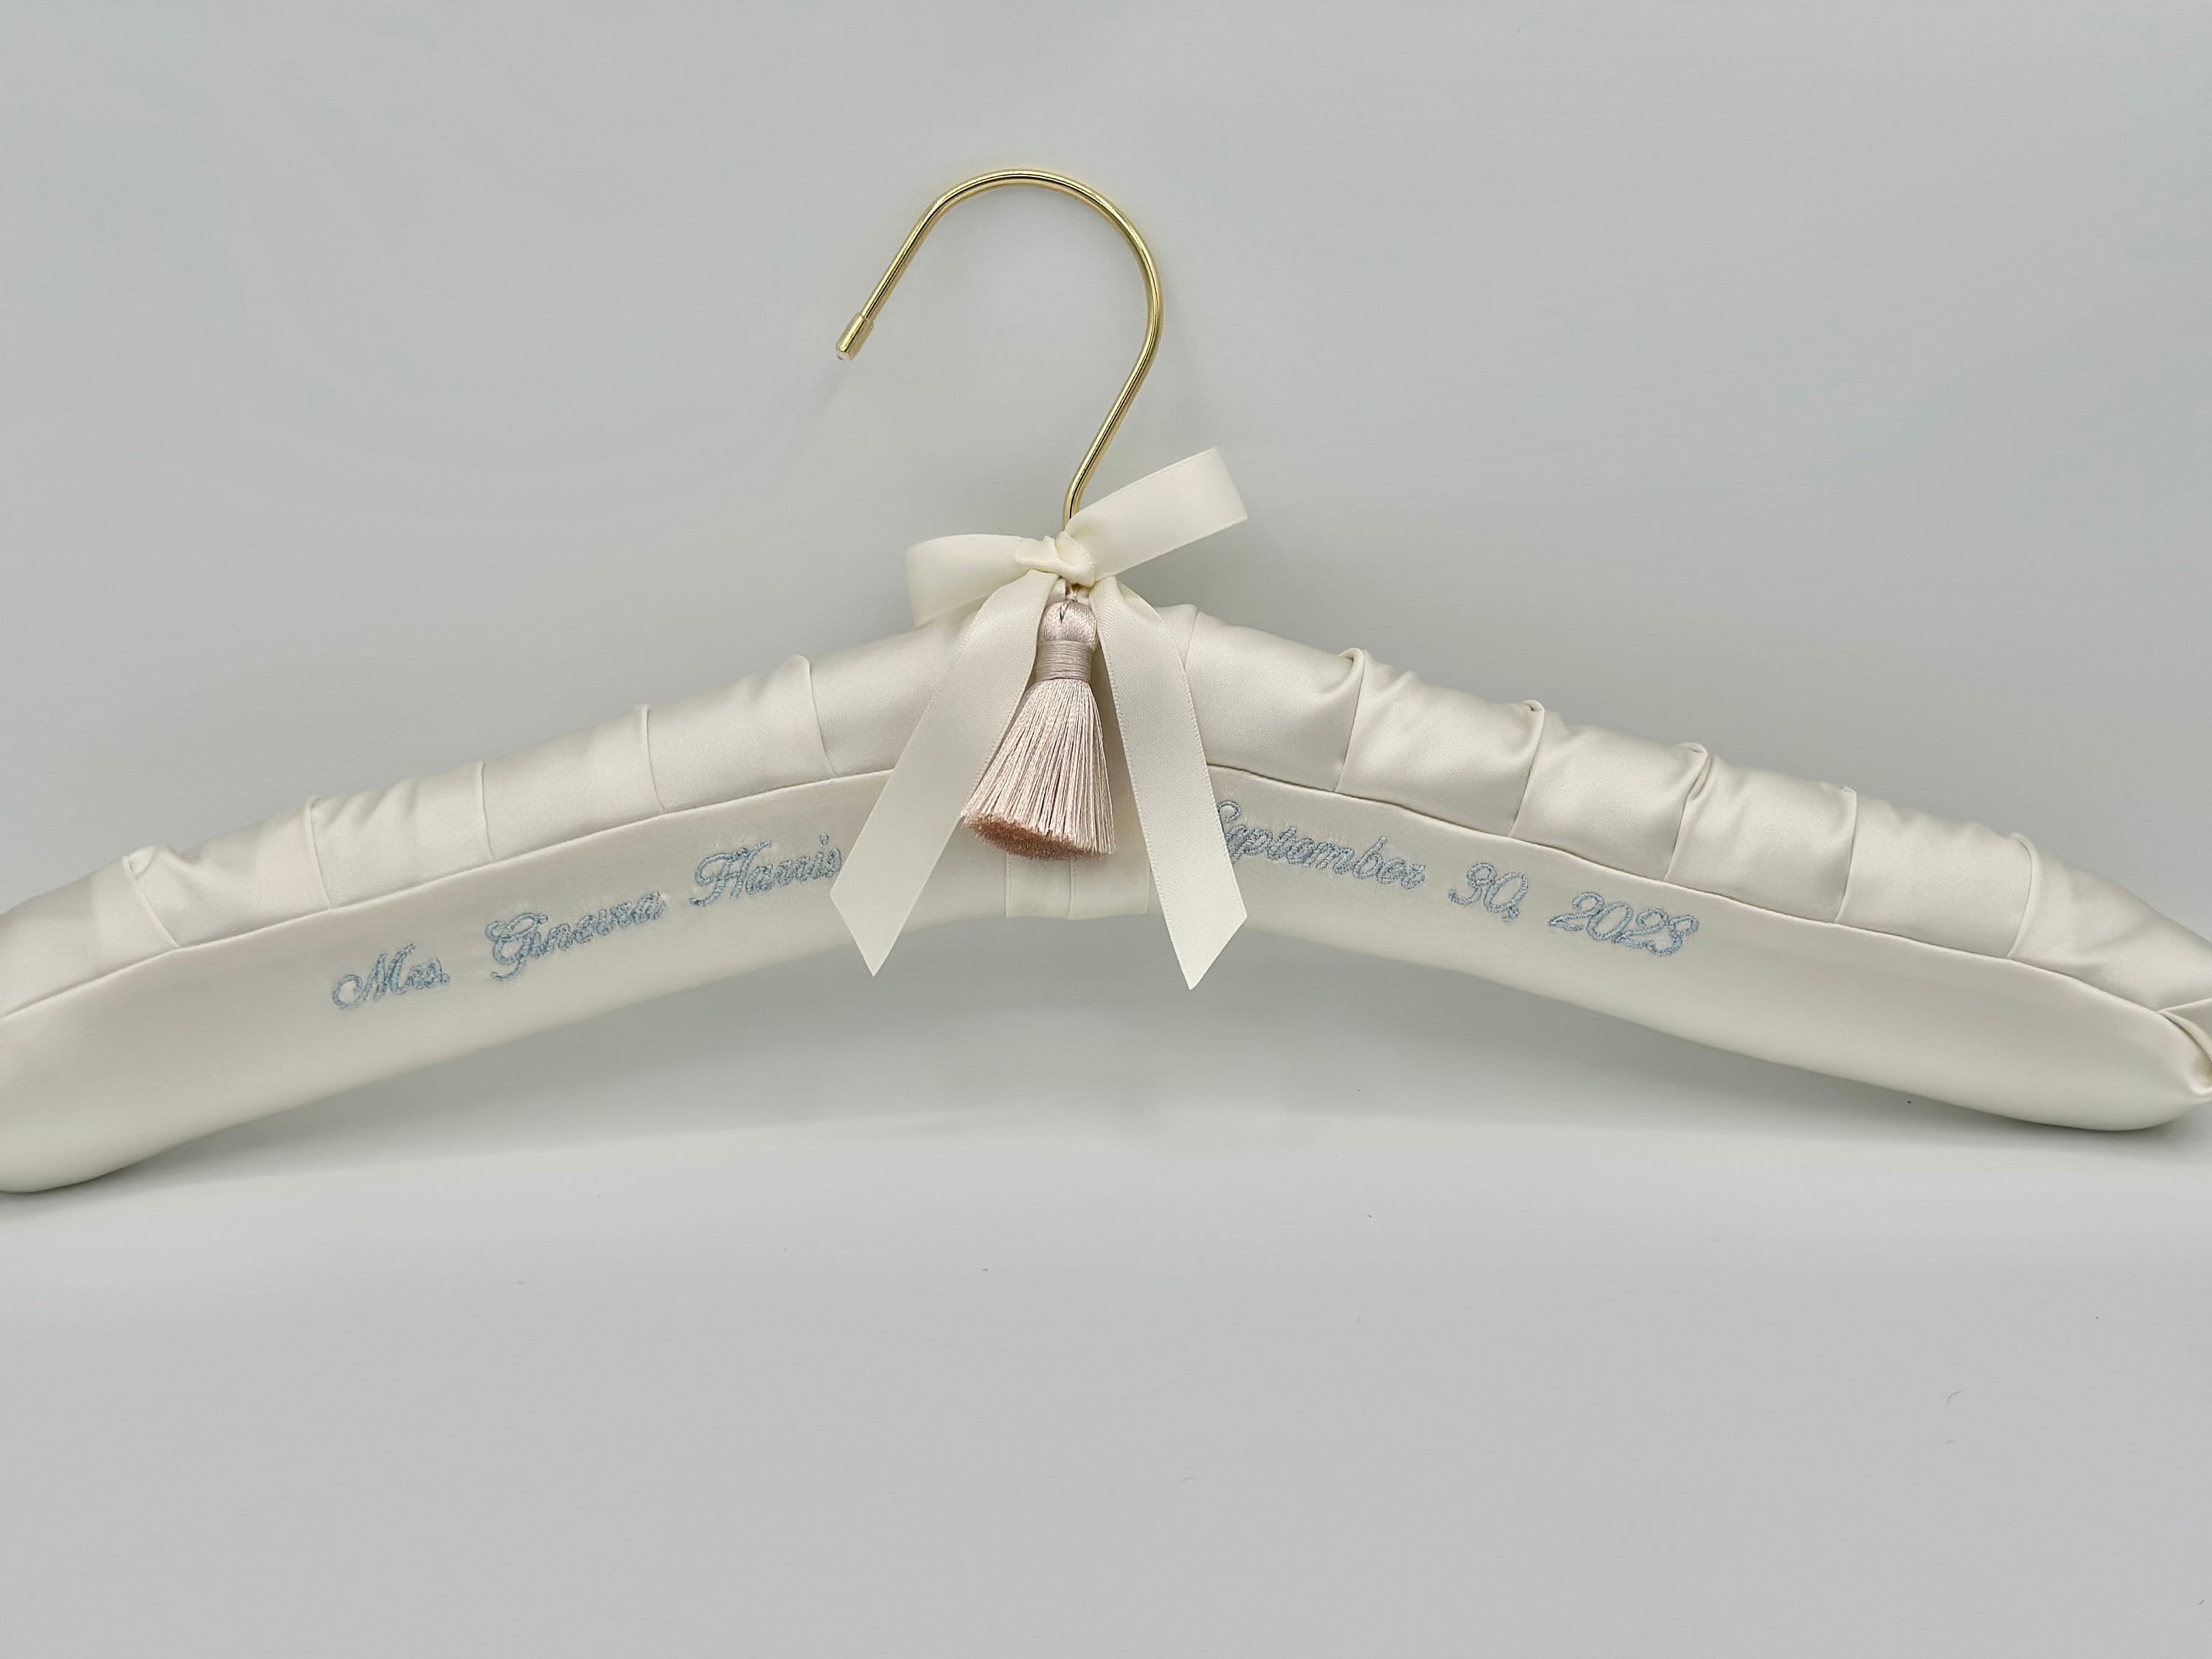 10 White Baby Satin Padded Hangers - Closet Hanger Factory